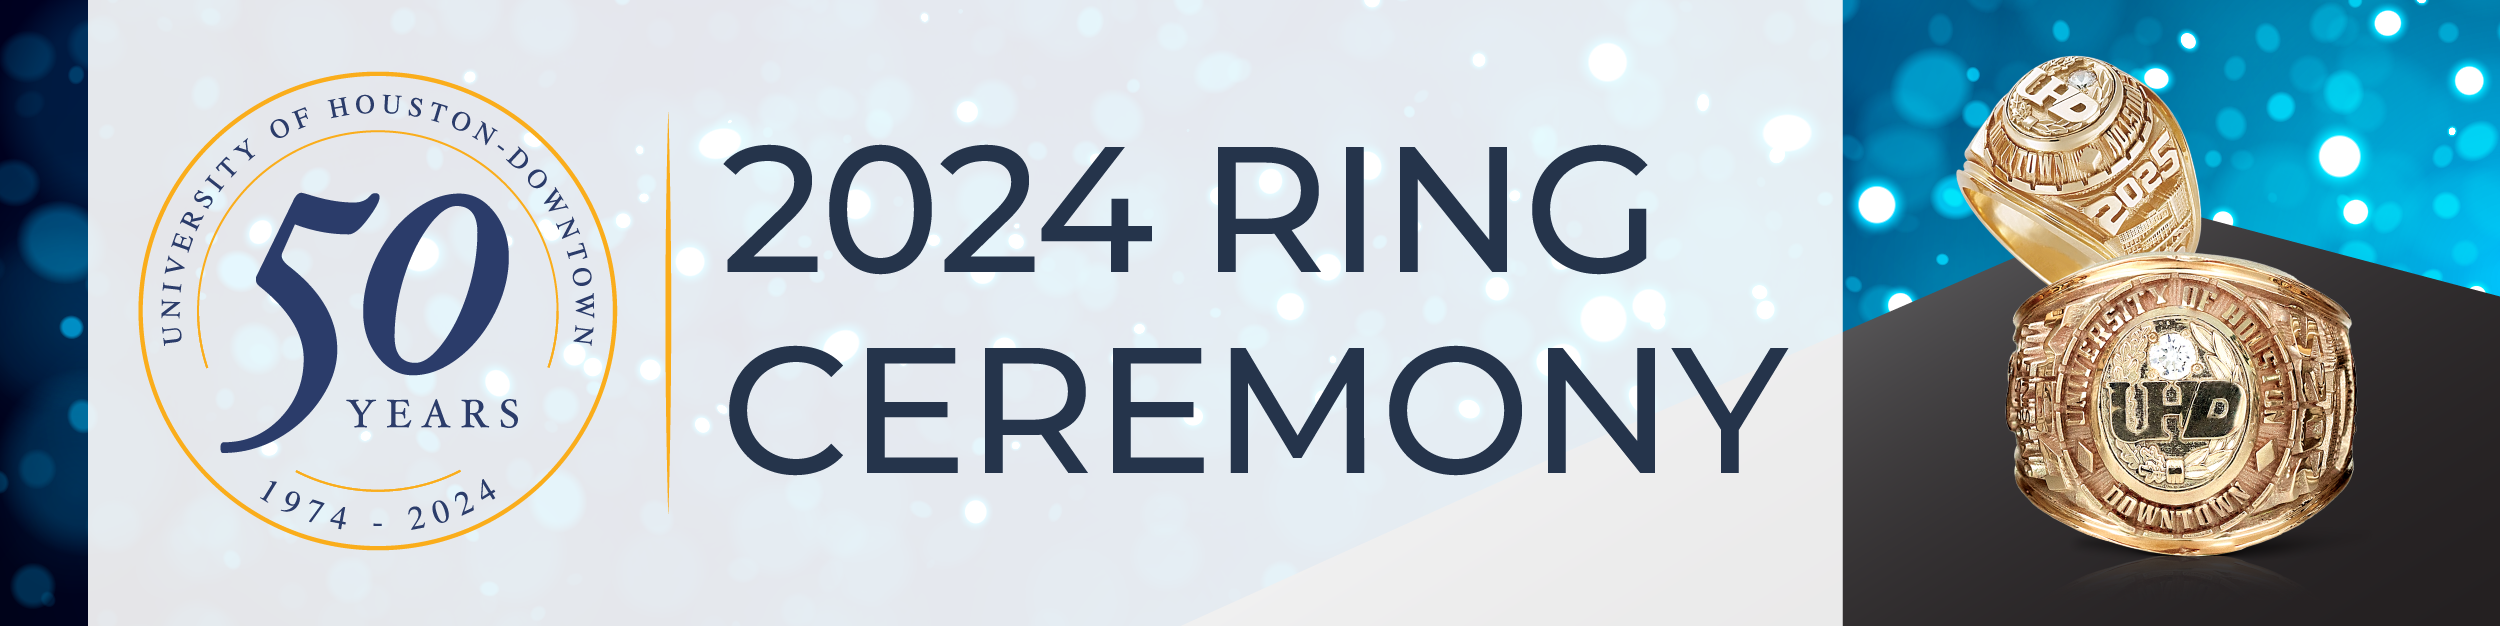 2024 Ring ceremony